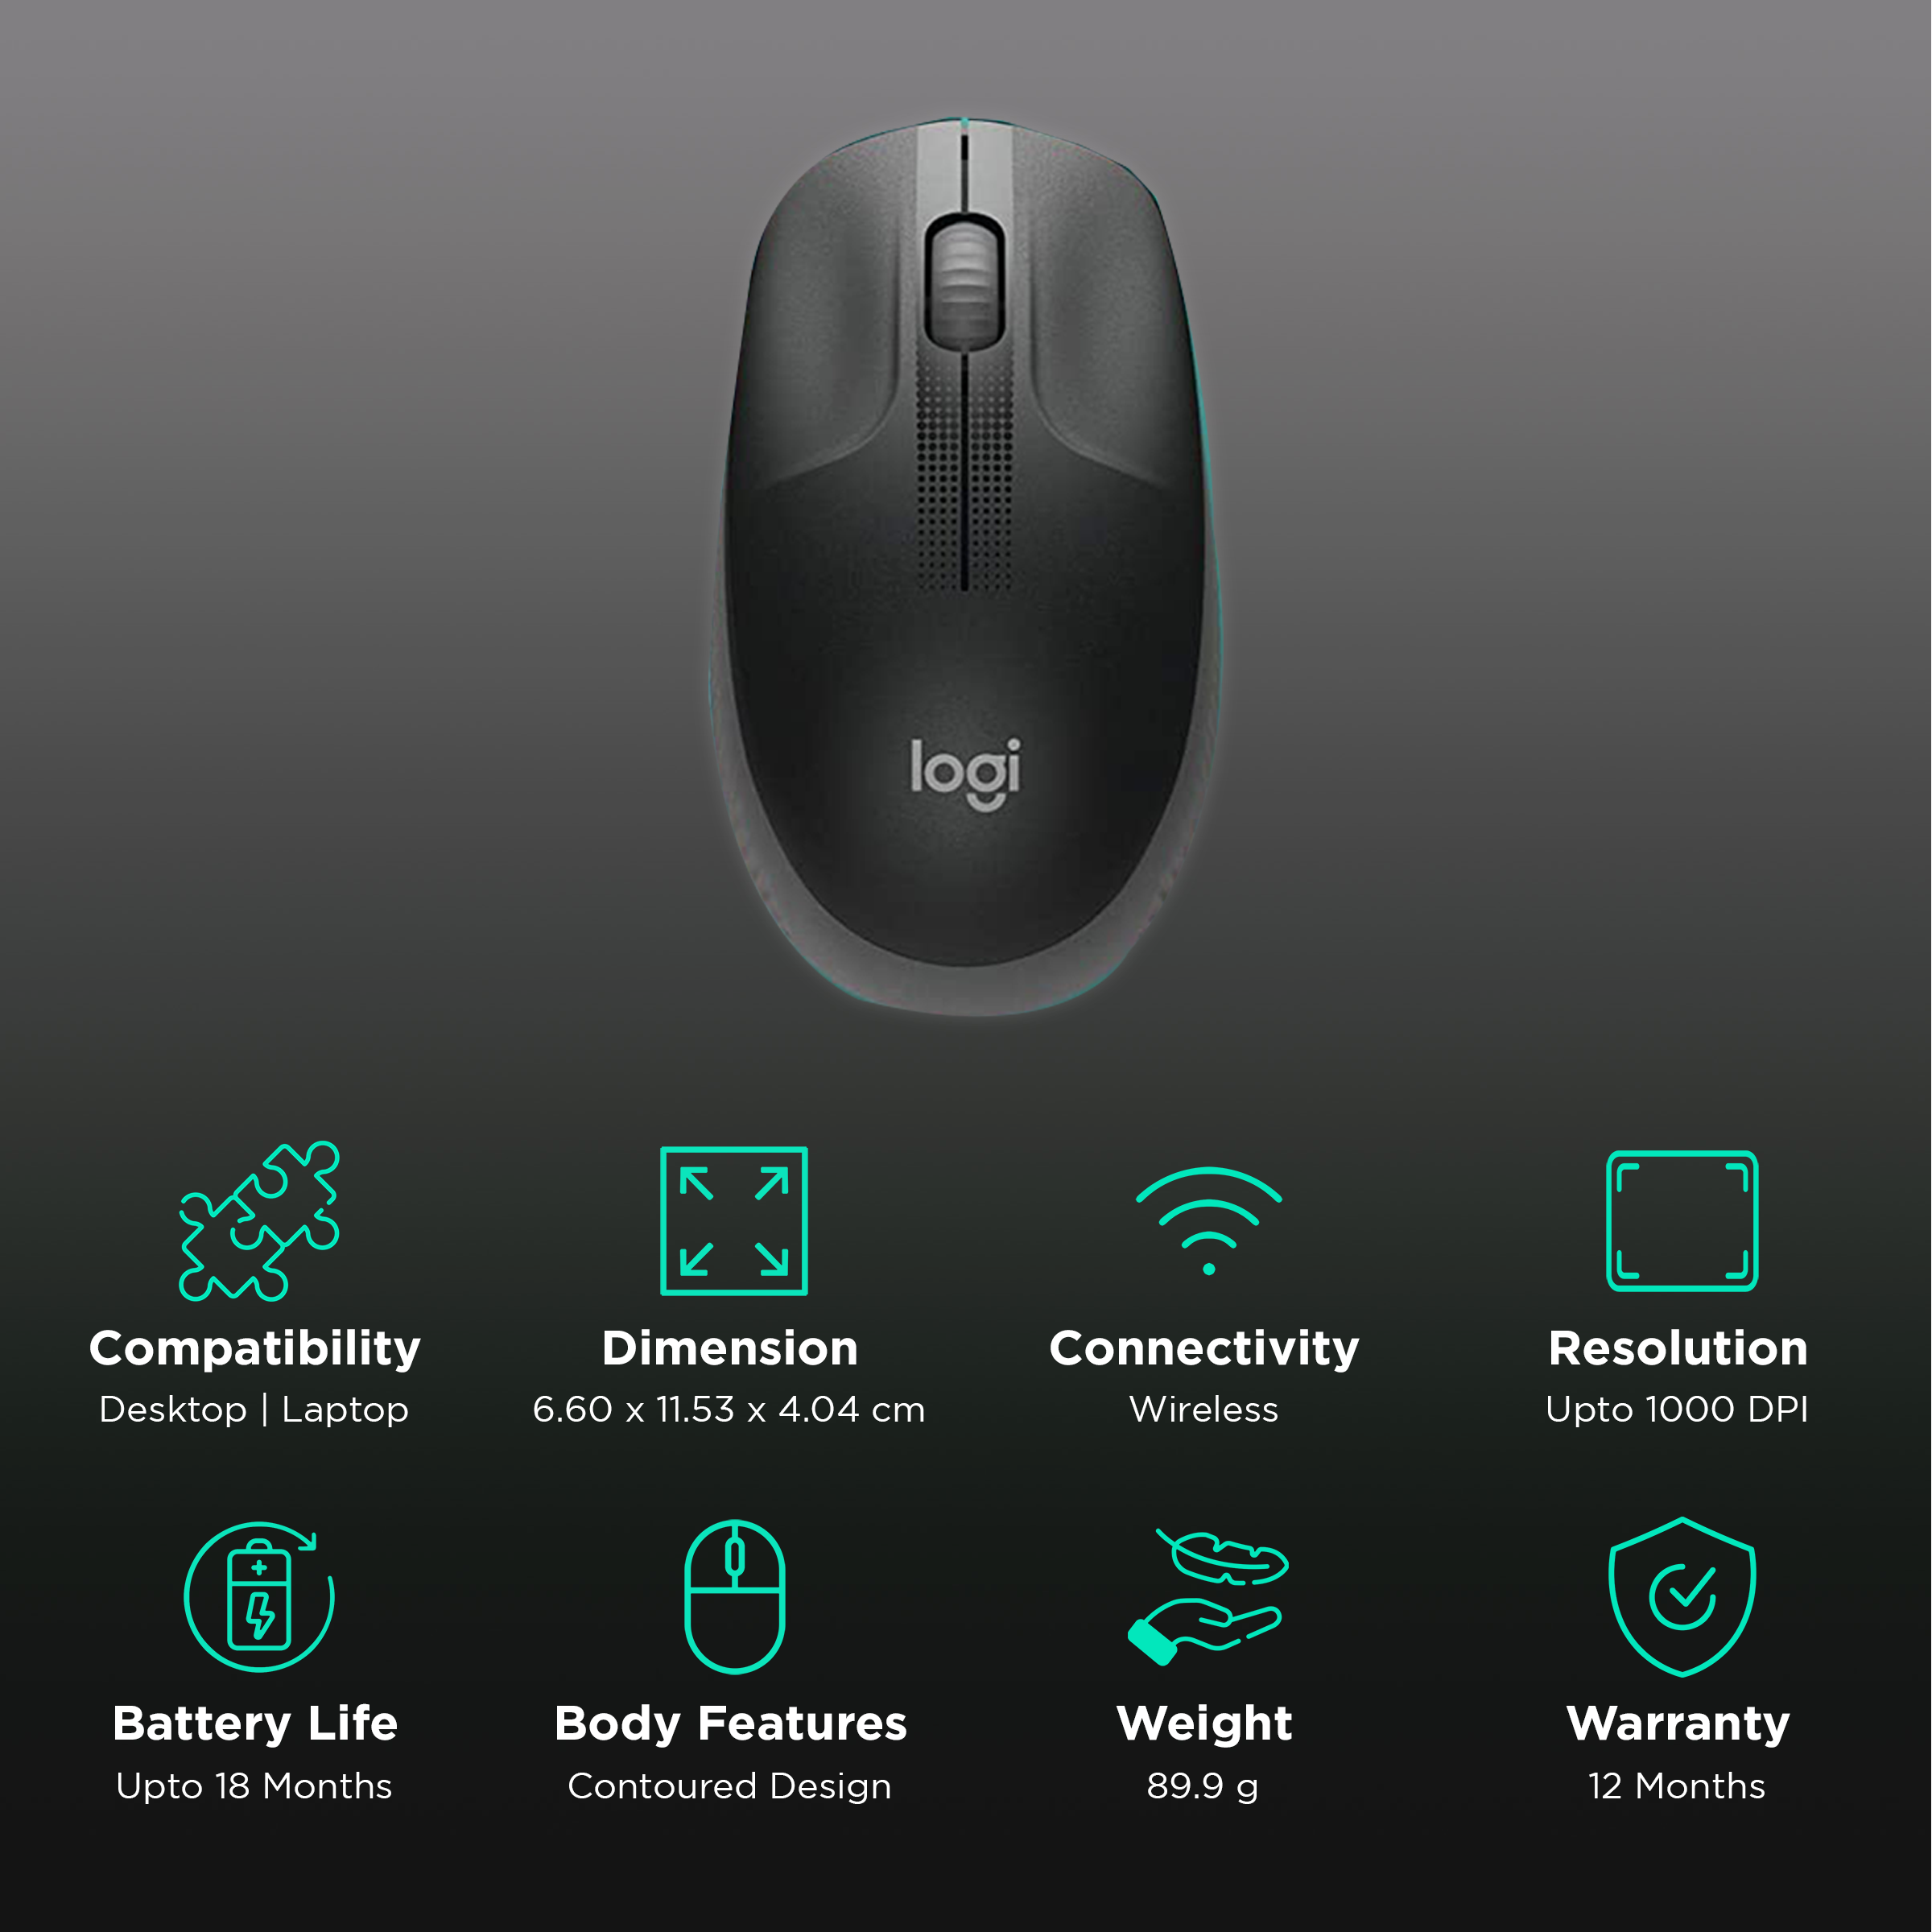  Logitech M190 Wireless Mouse Full Size Comfort Curve Design  1000Dpi Charcoal : Electronics